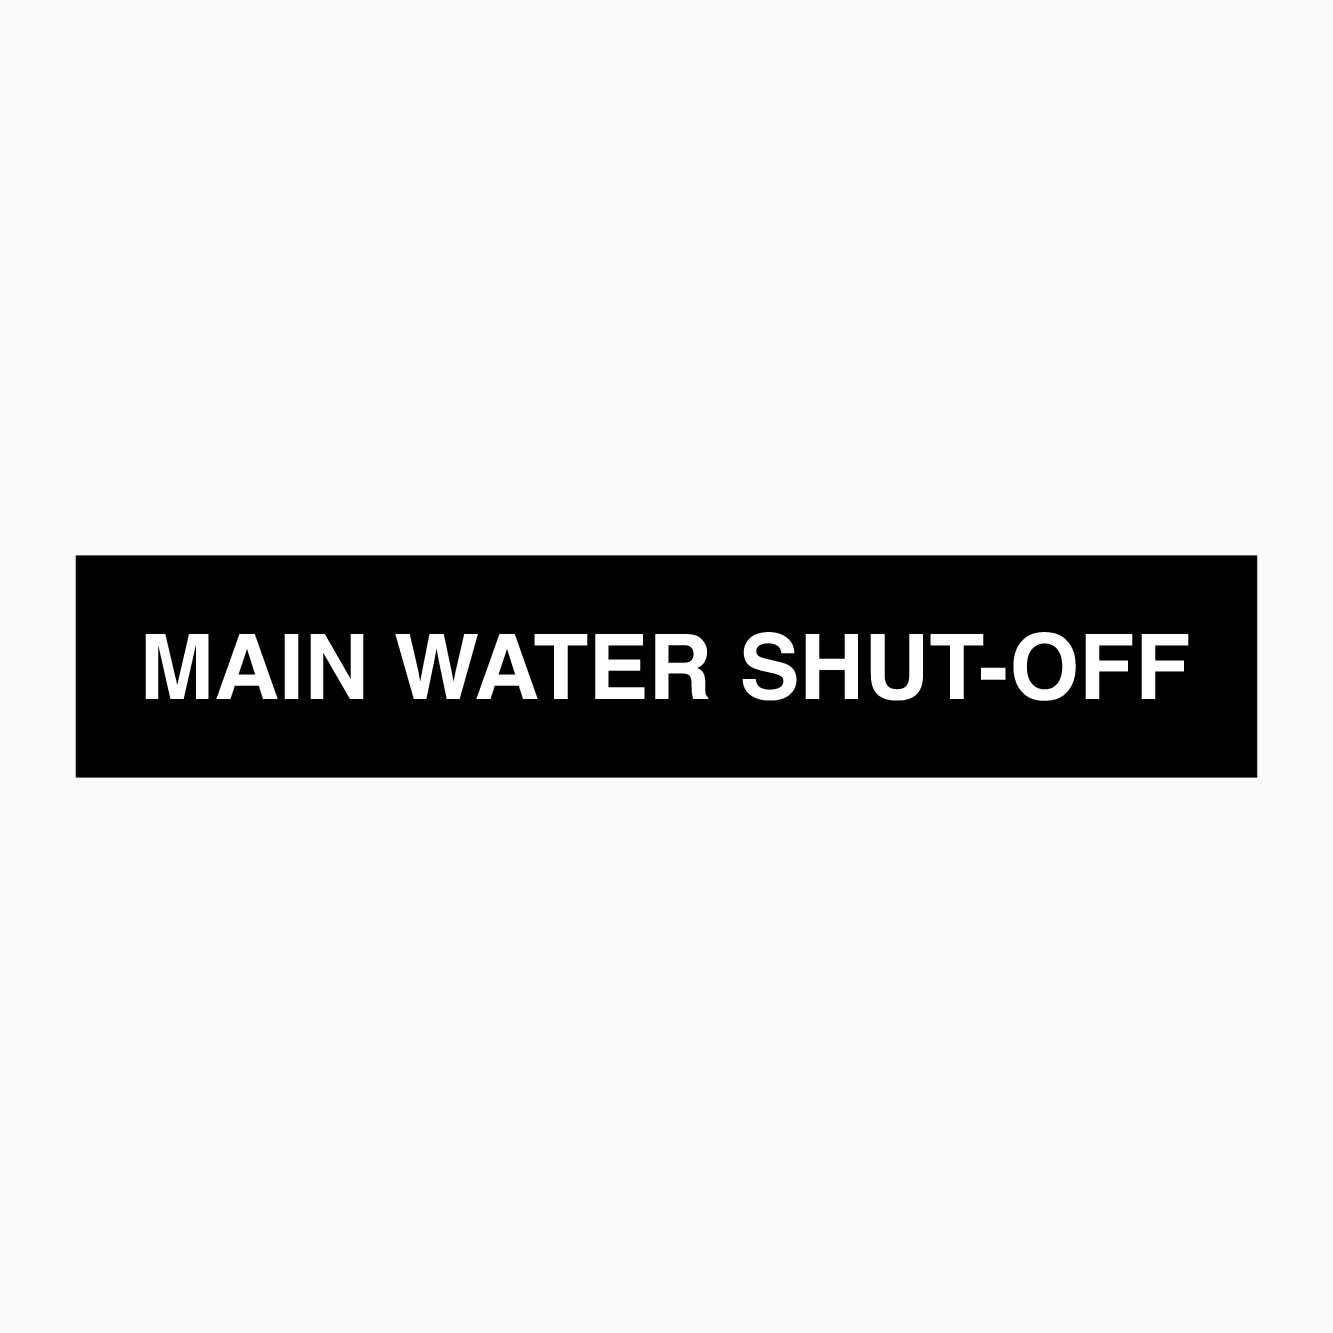 MAIN WATER SHUT-OFF SIGN